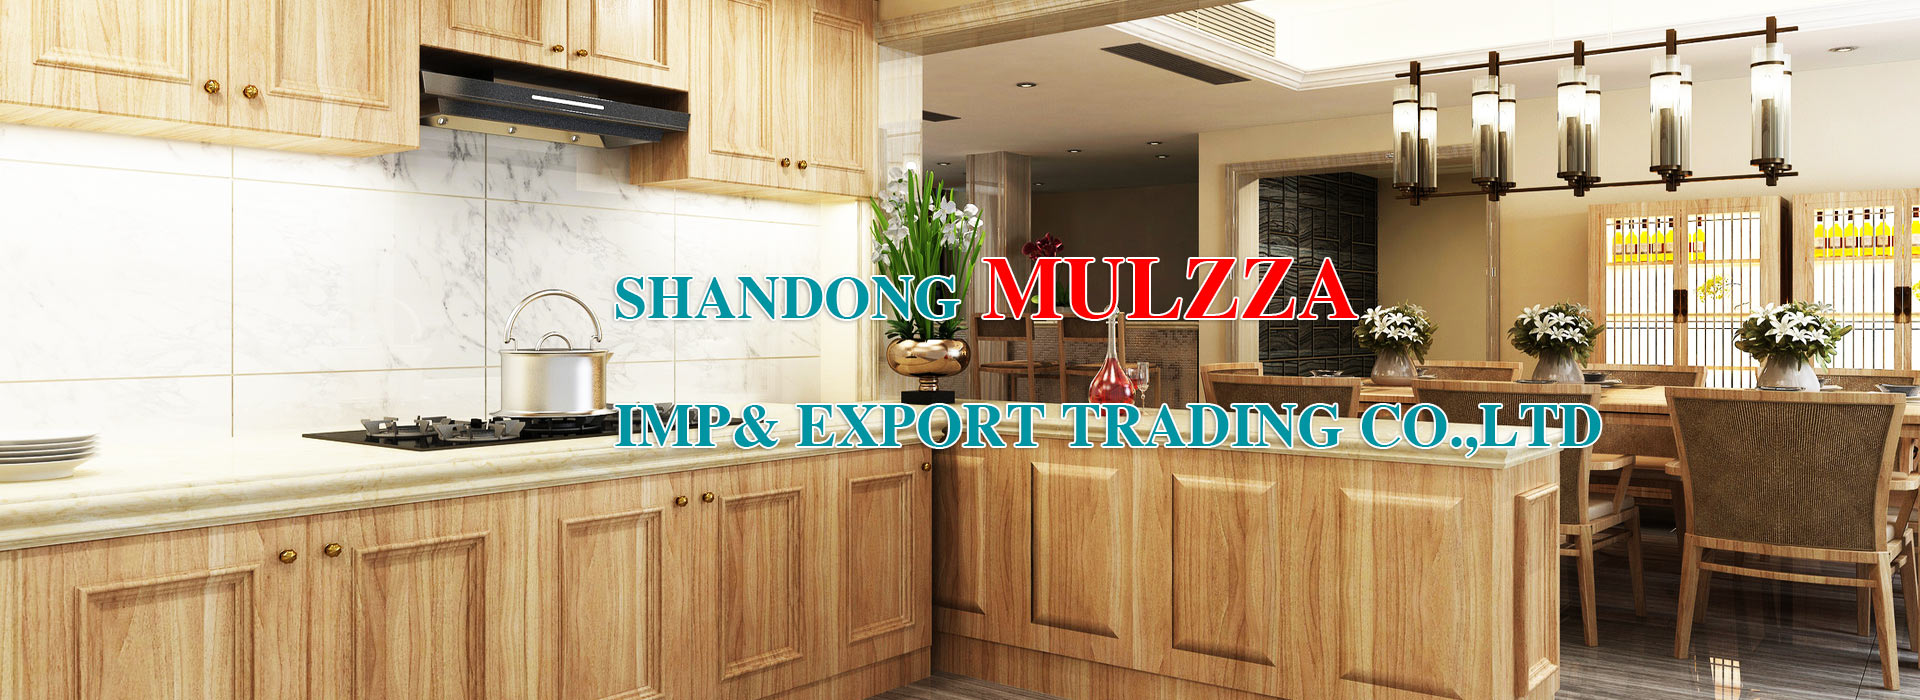 Shandong Mulzza lmp& Export Trading Co.,Ltd